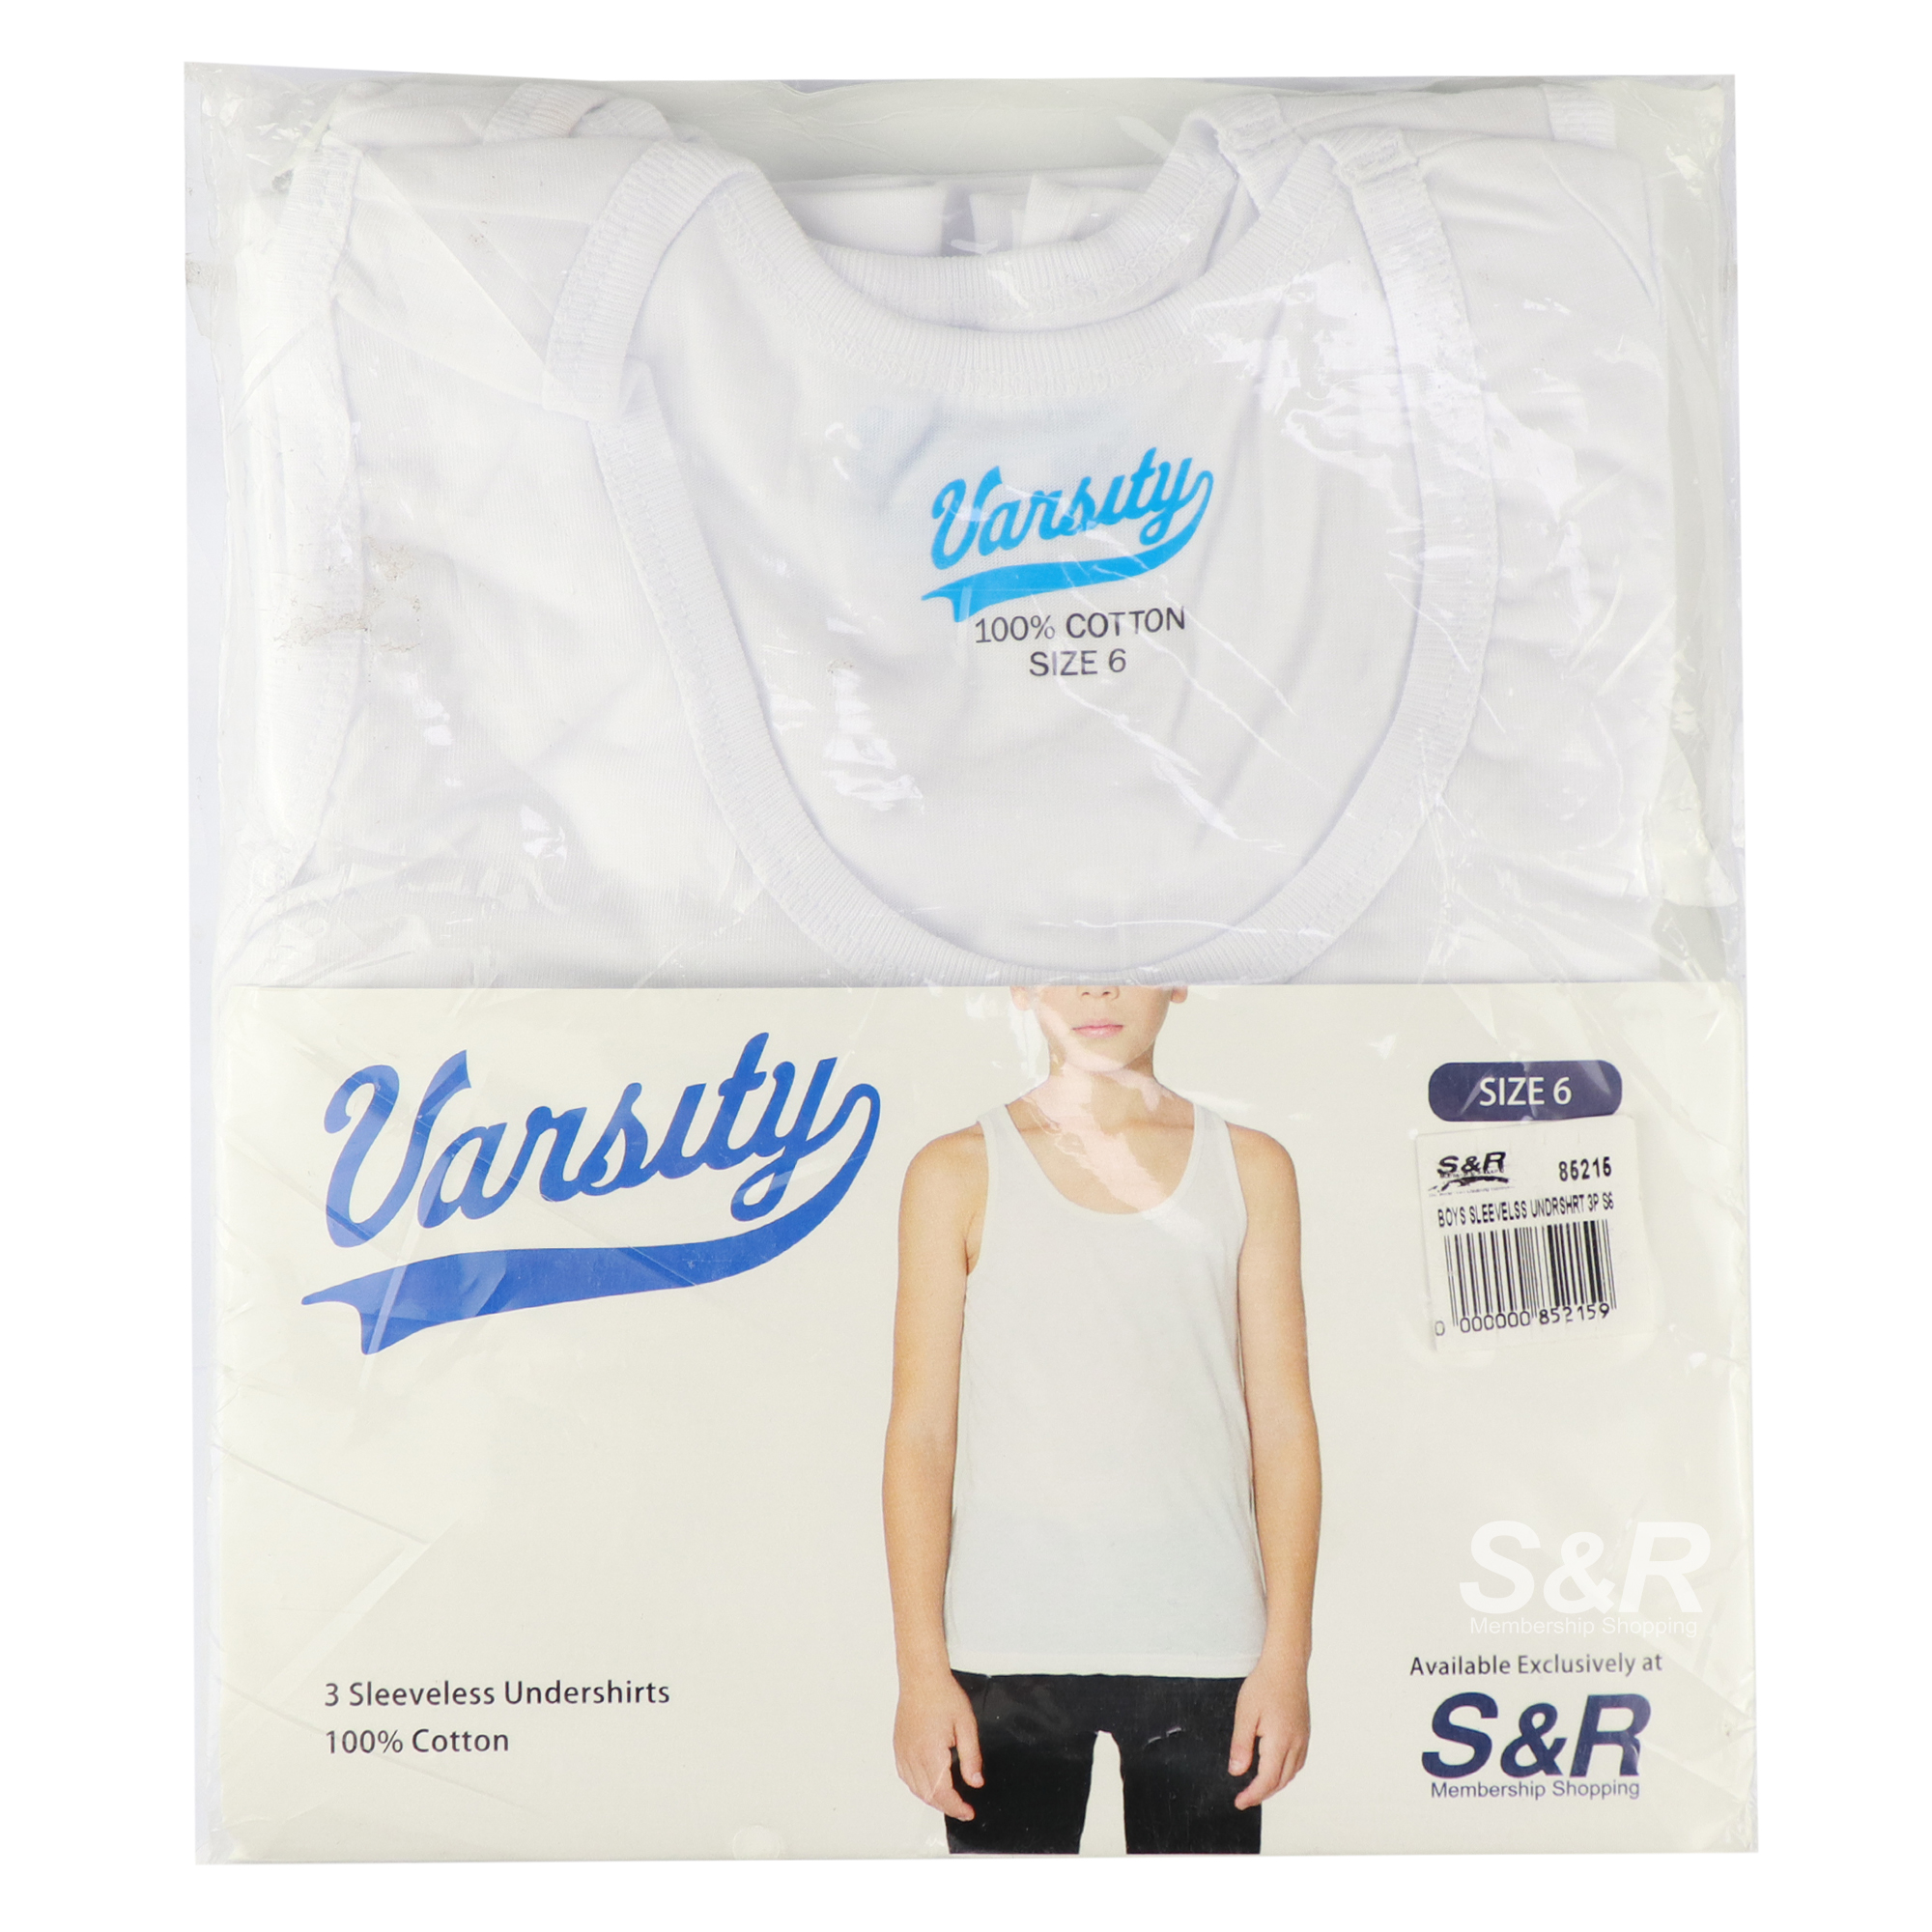 Varsity Boys Size 6 Sleeveless Undershirt 3pcs